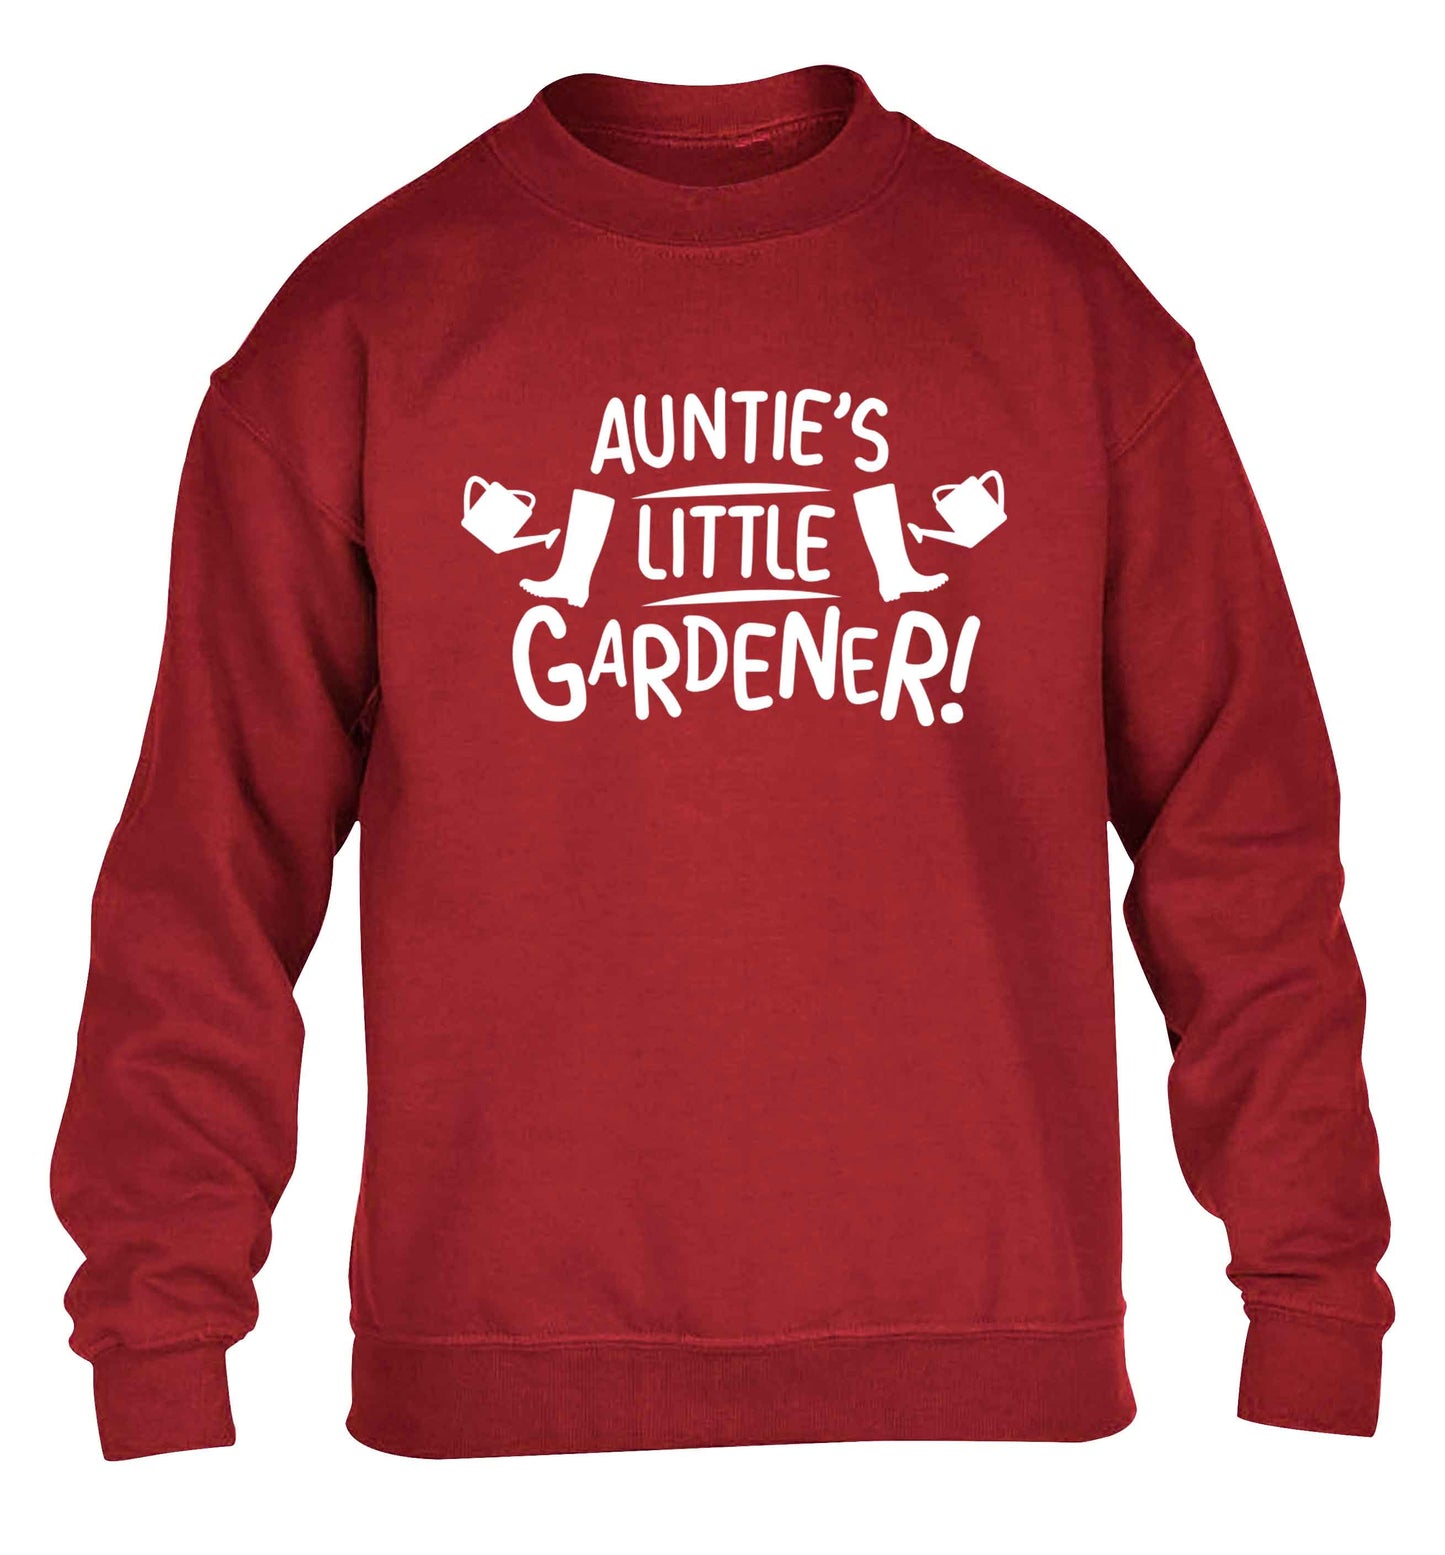 Auntie's little gardener children's grey sweater 12-13 Years